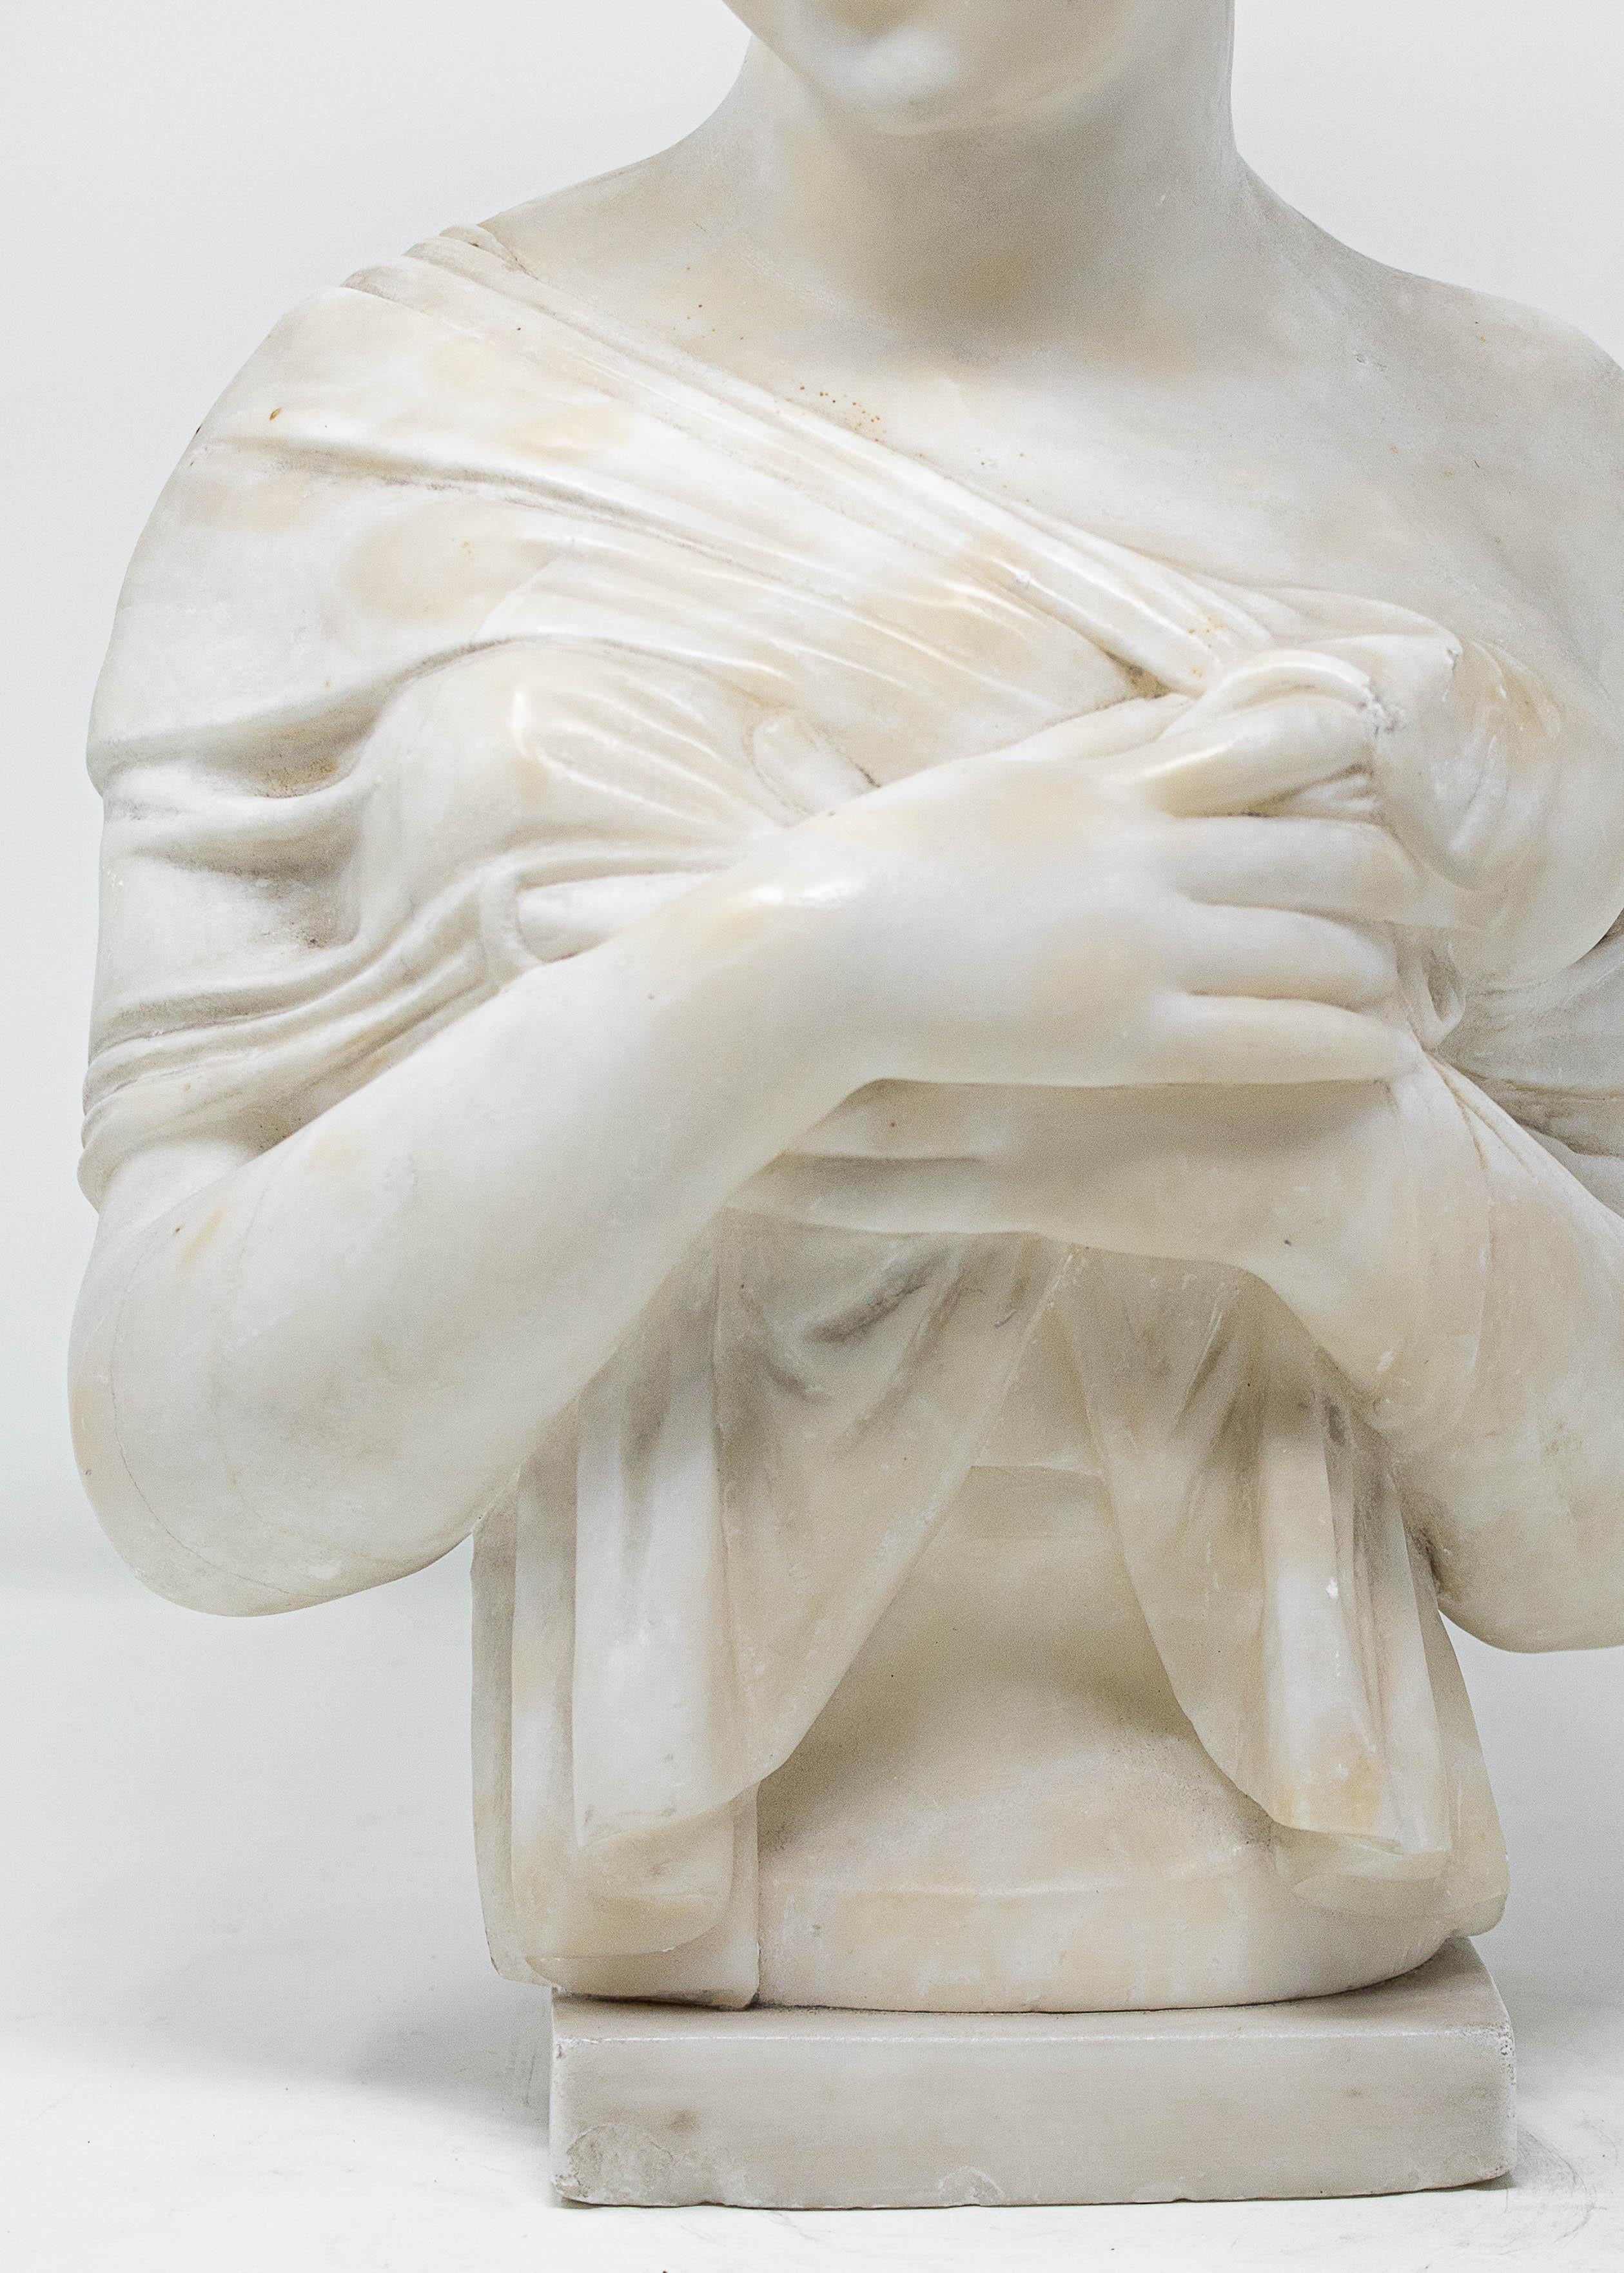 19thC

Bust of Juliette Récamier

Alabaster, 42 x 23 x 11 cm

The sculpture depicts the bust of Jeanne Françoise Julie Adélaïde Bernard, better known as Juliette Récamier or Madame Récamier (Lyon, Dec. 3, 1777-Paris, May 11, 1849), a famous French